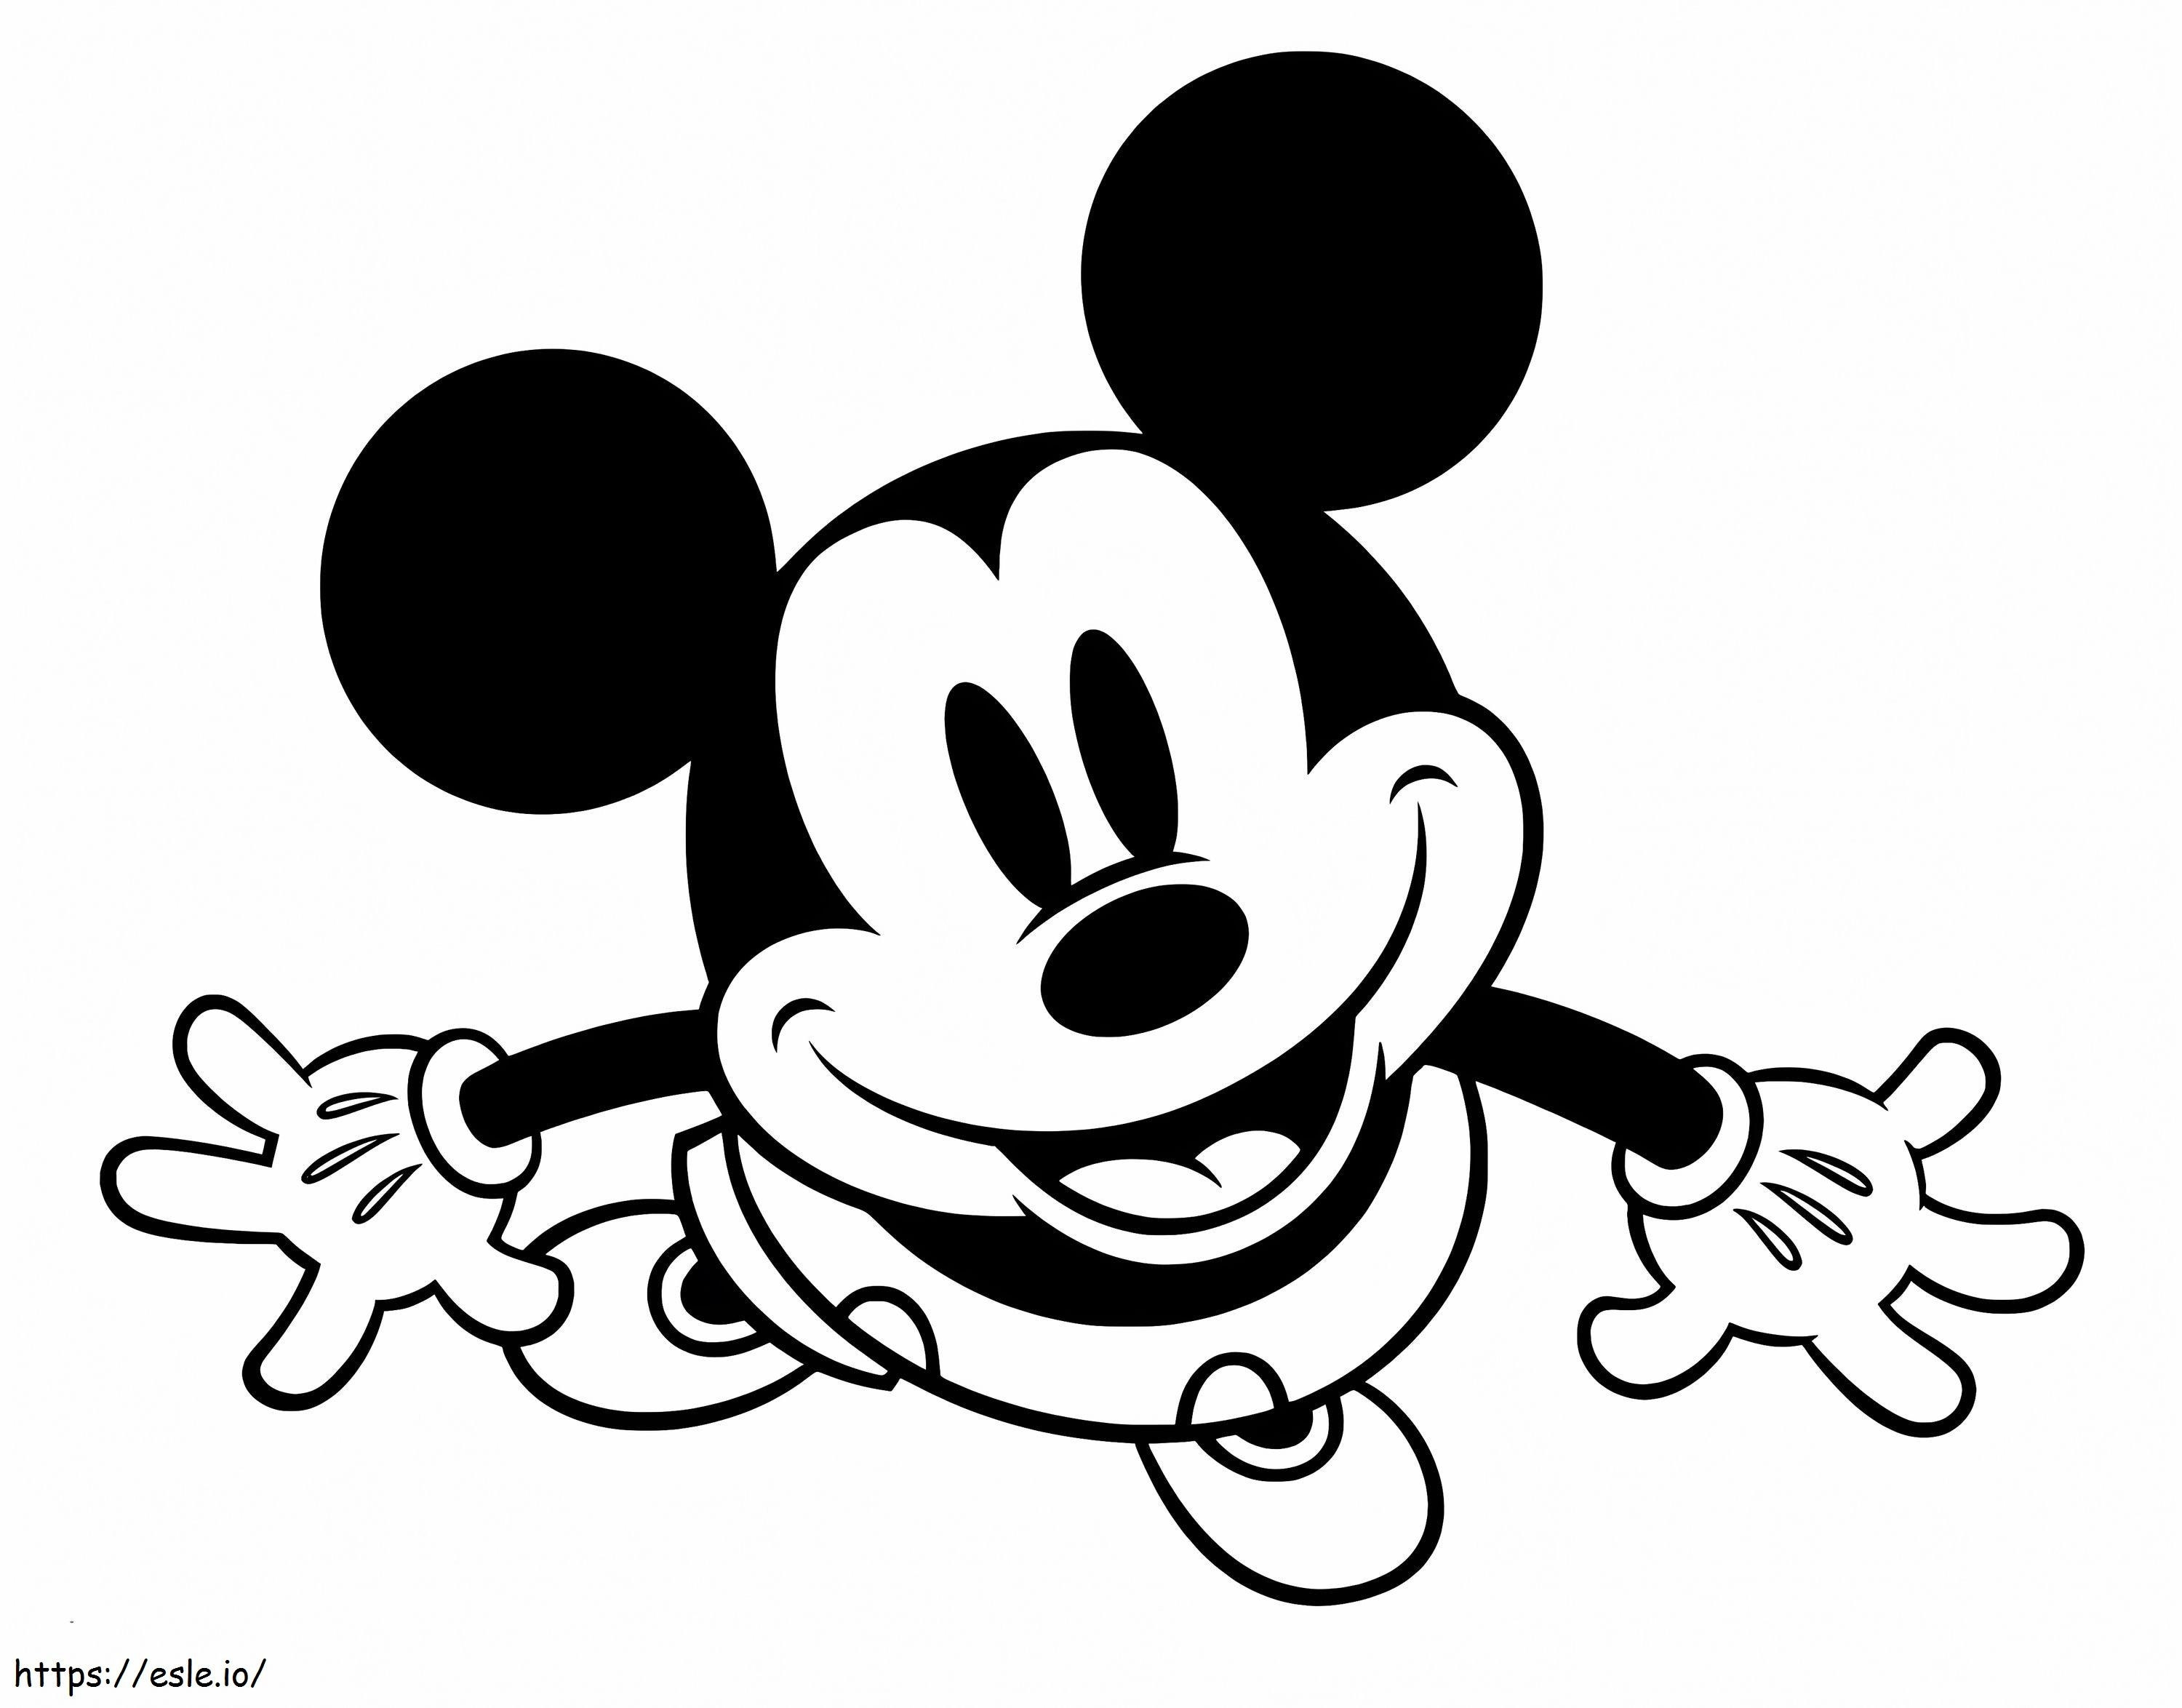 Distractiv Mickey Mouse de colorat